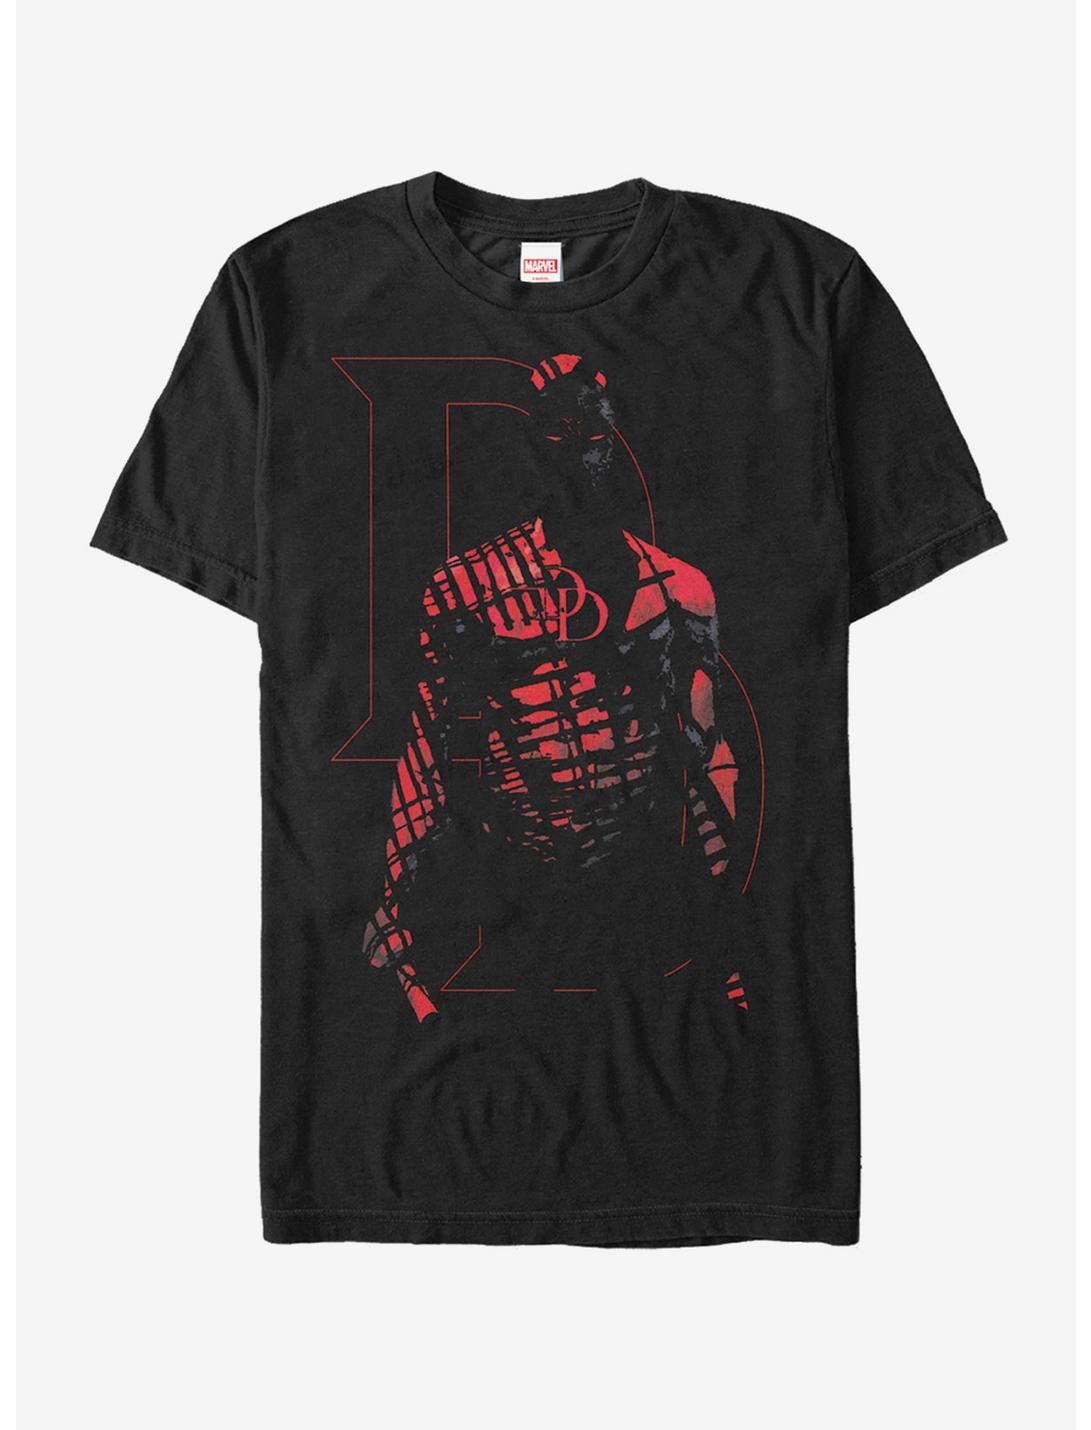 Marvel Daredevil in Shadows T-Shirt, BLACK, hi-res